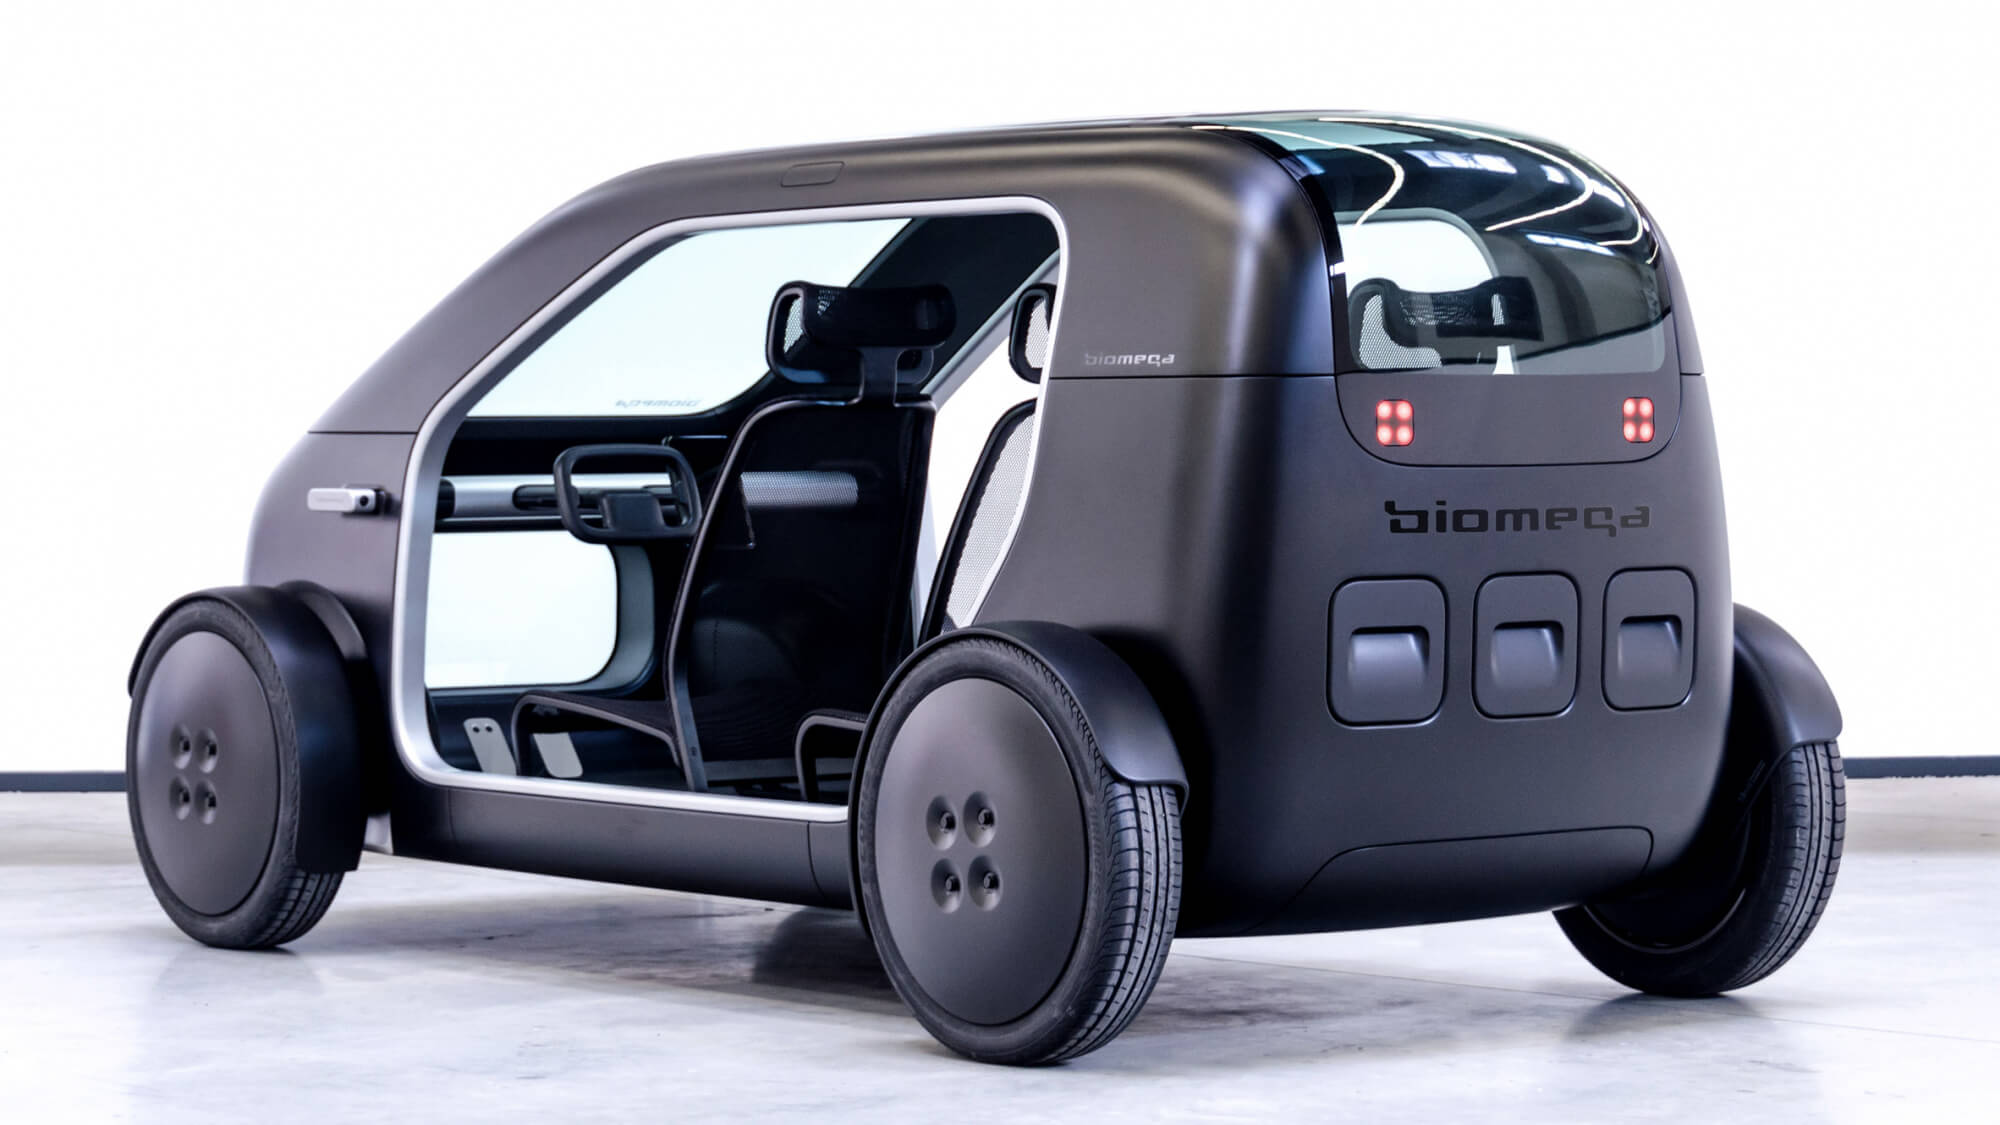 biomega-electric-car-concept-design-technology-vehicle_dezeen_2364_hero2.jpg